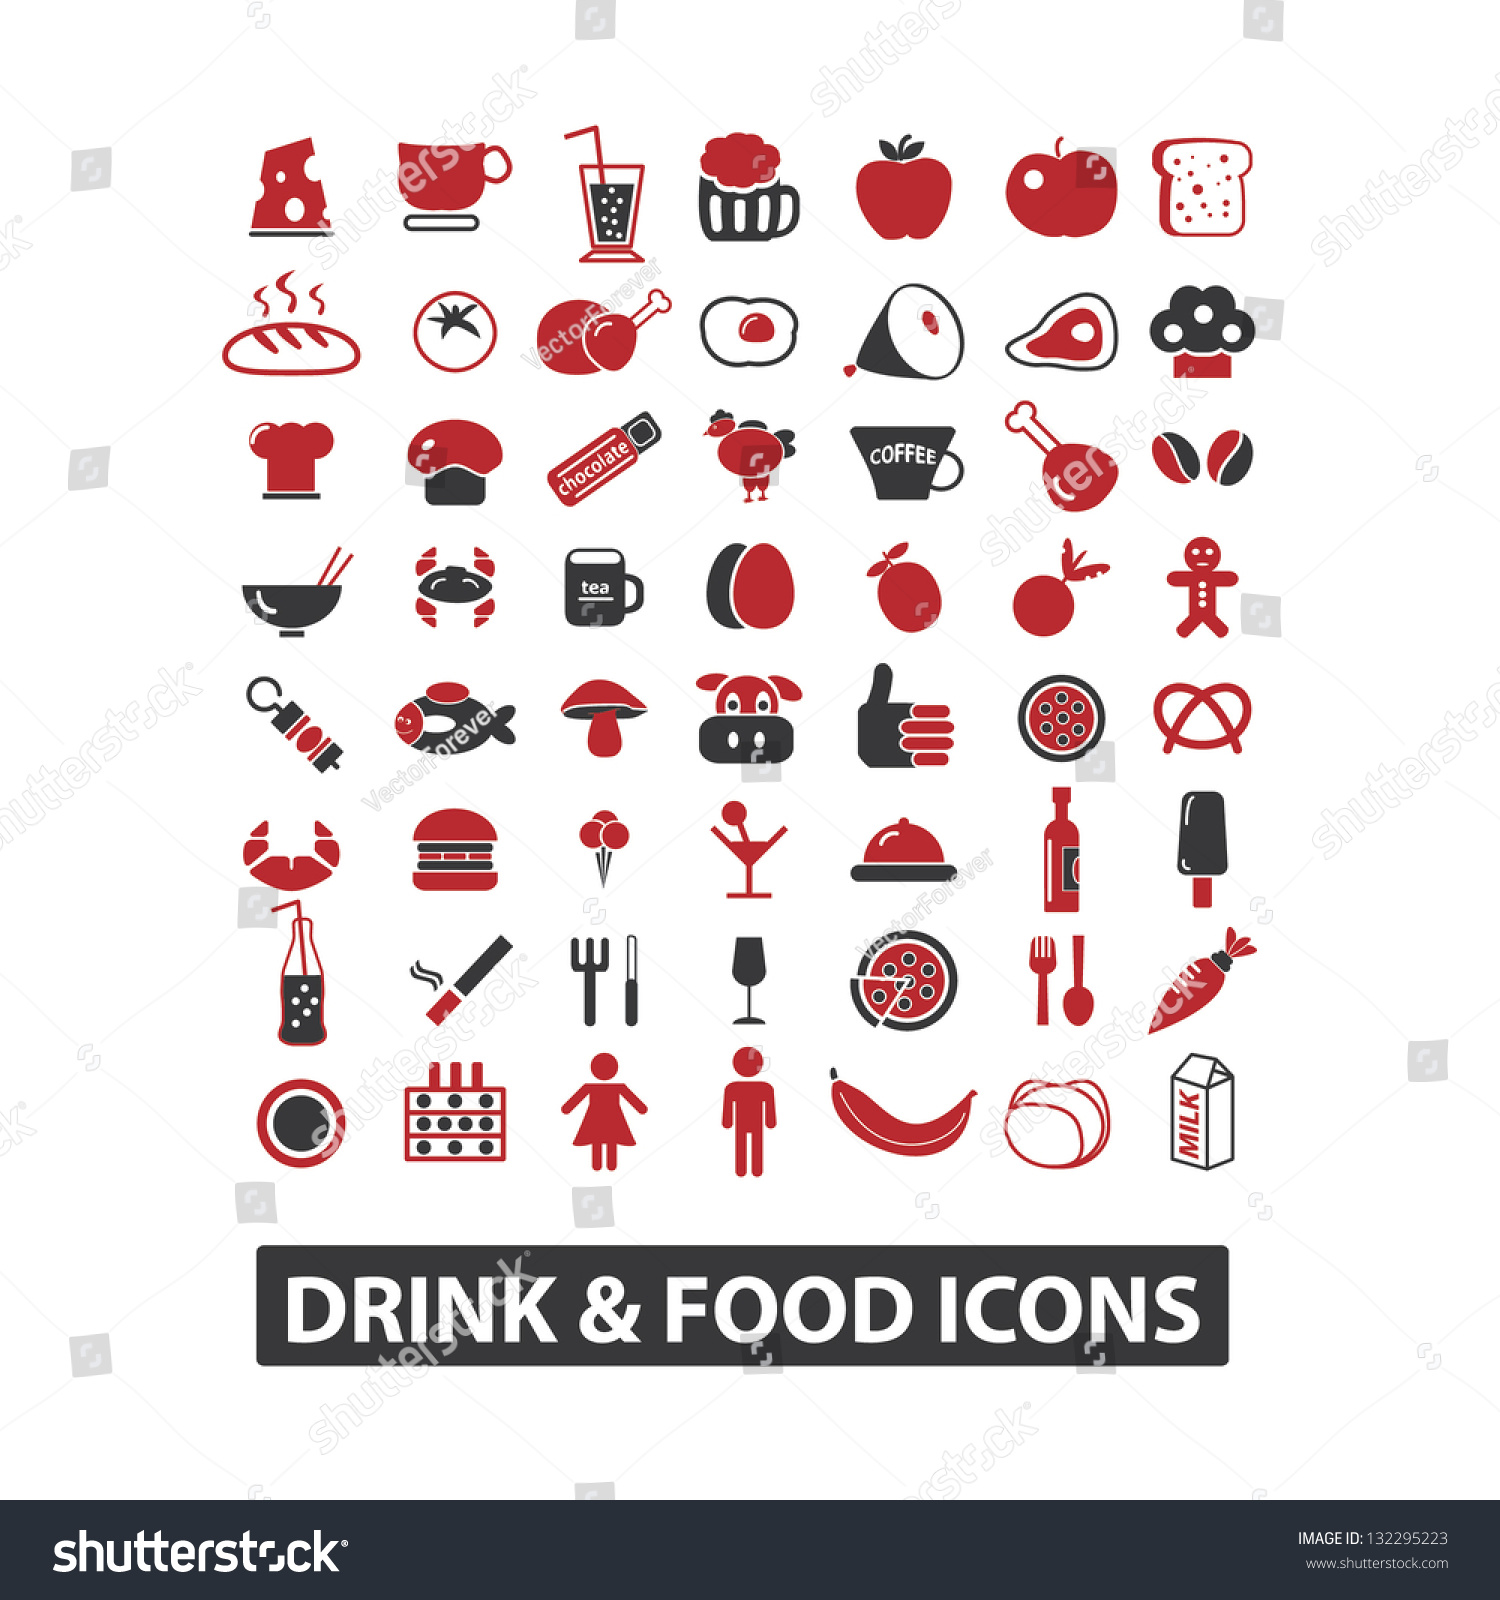 Drink & Food Icons Set, Vector - 132295223 : Shutterstock